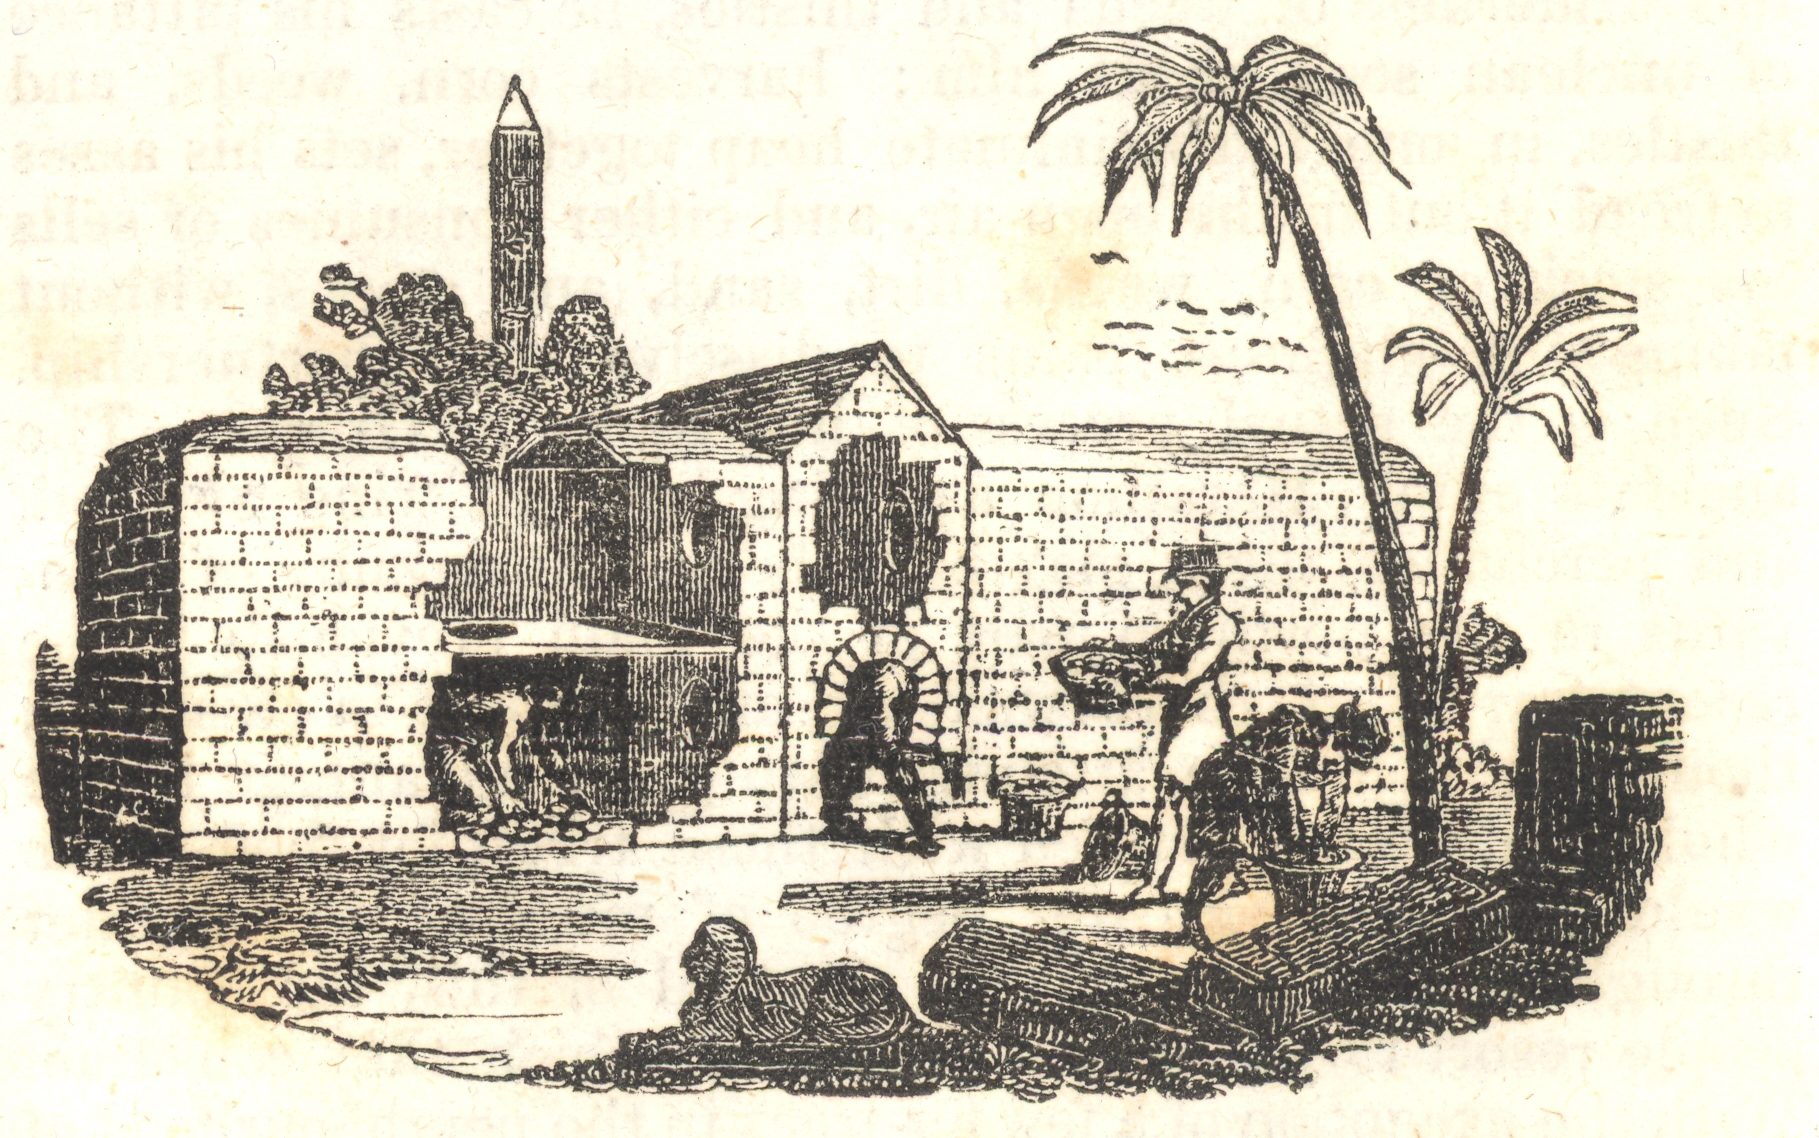 An illustration depicting an Egyptian egg oven